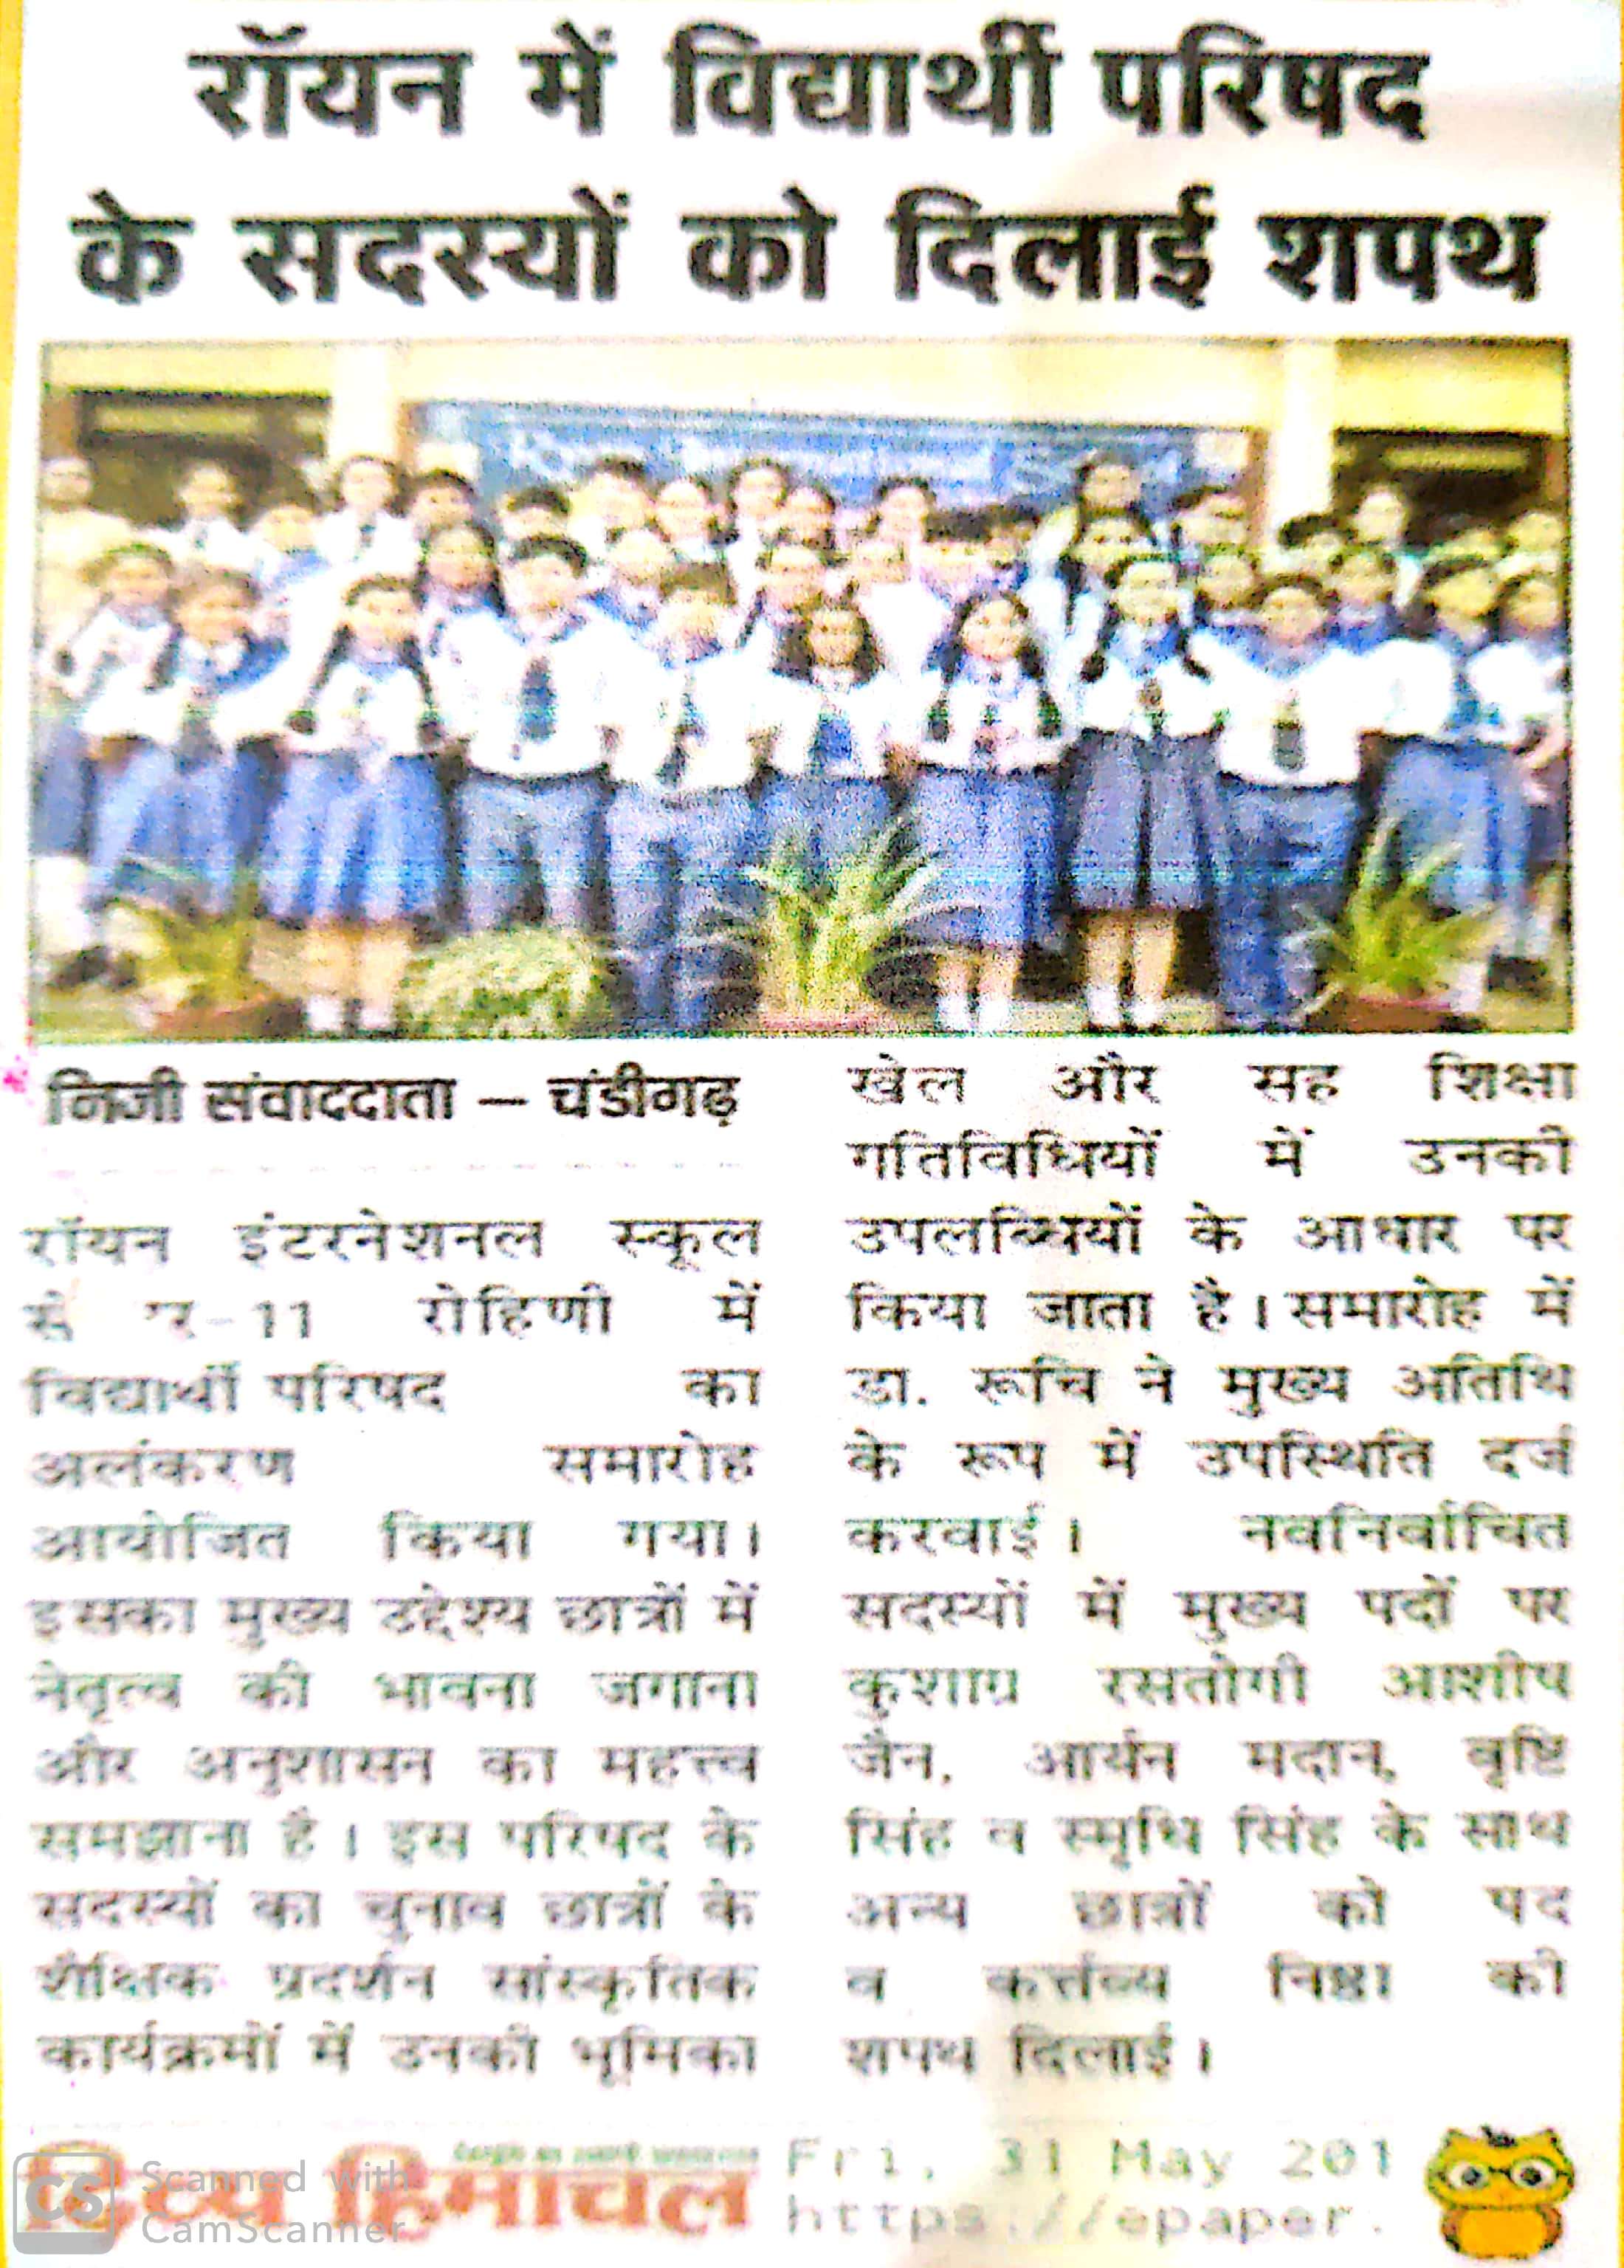 Divya Himachal - Ryan International School, Rohini Sec 11, H3